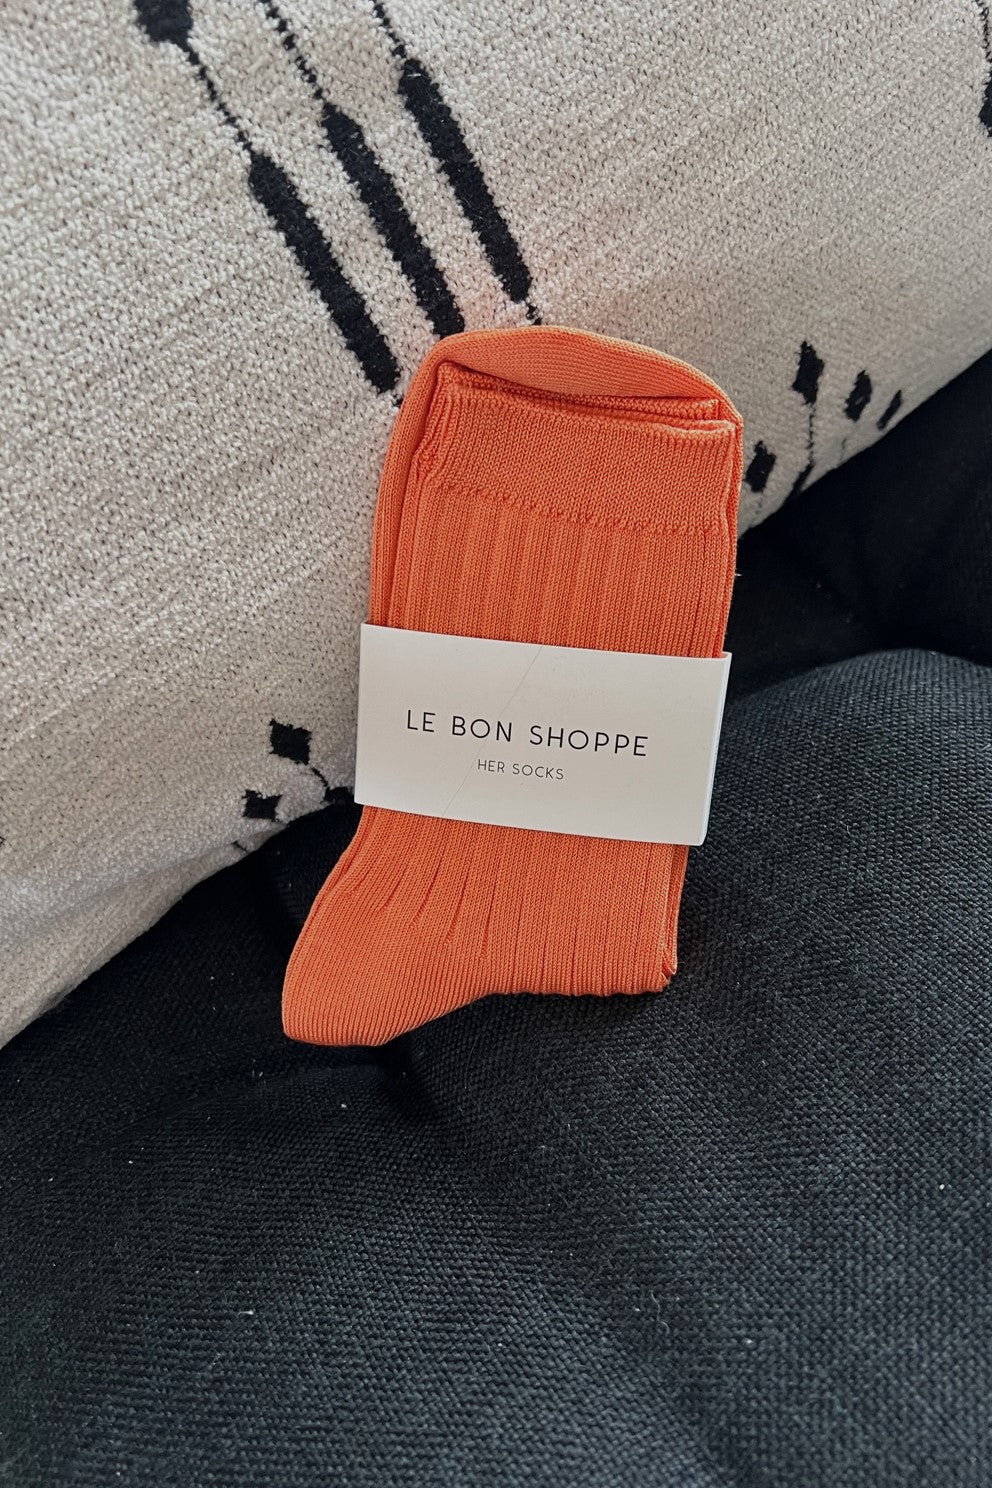 Le Bon - Her Socks